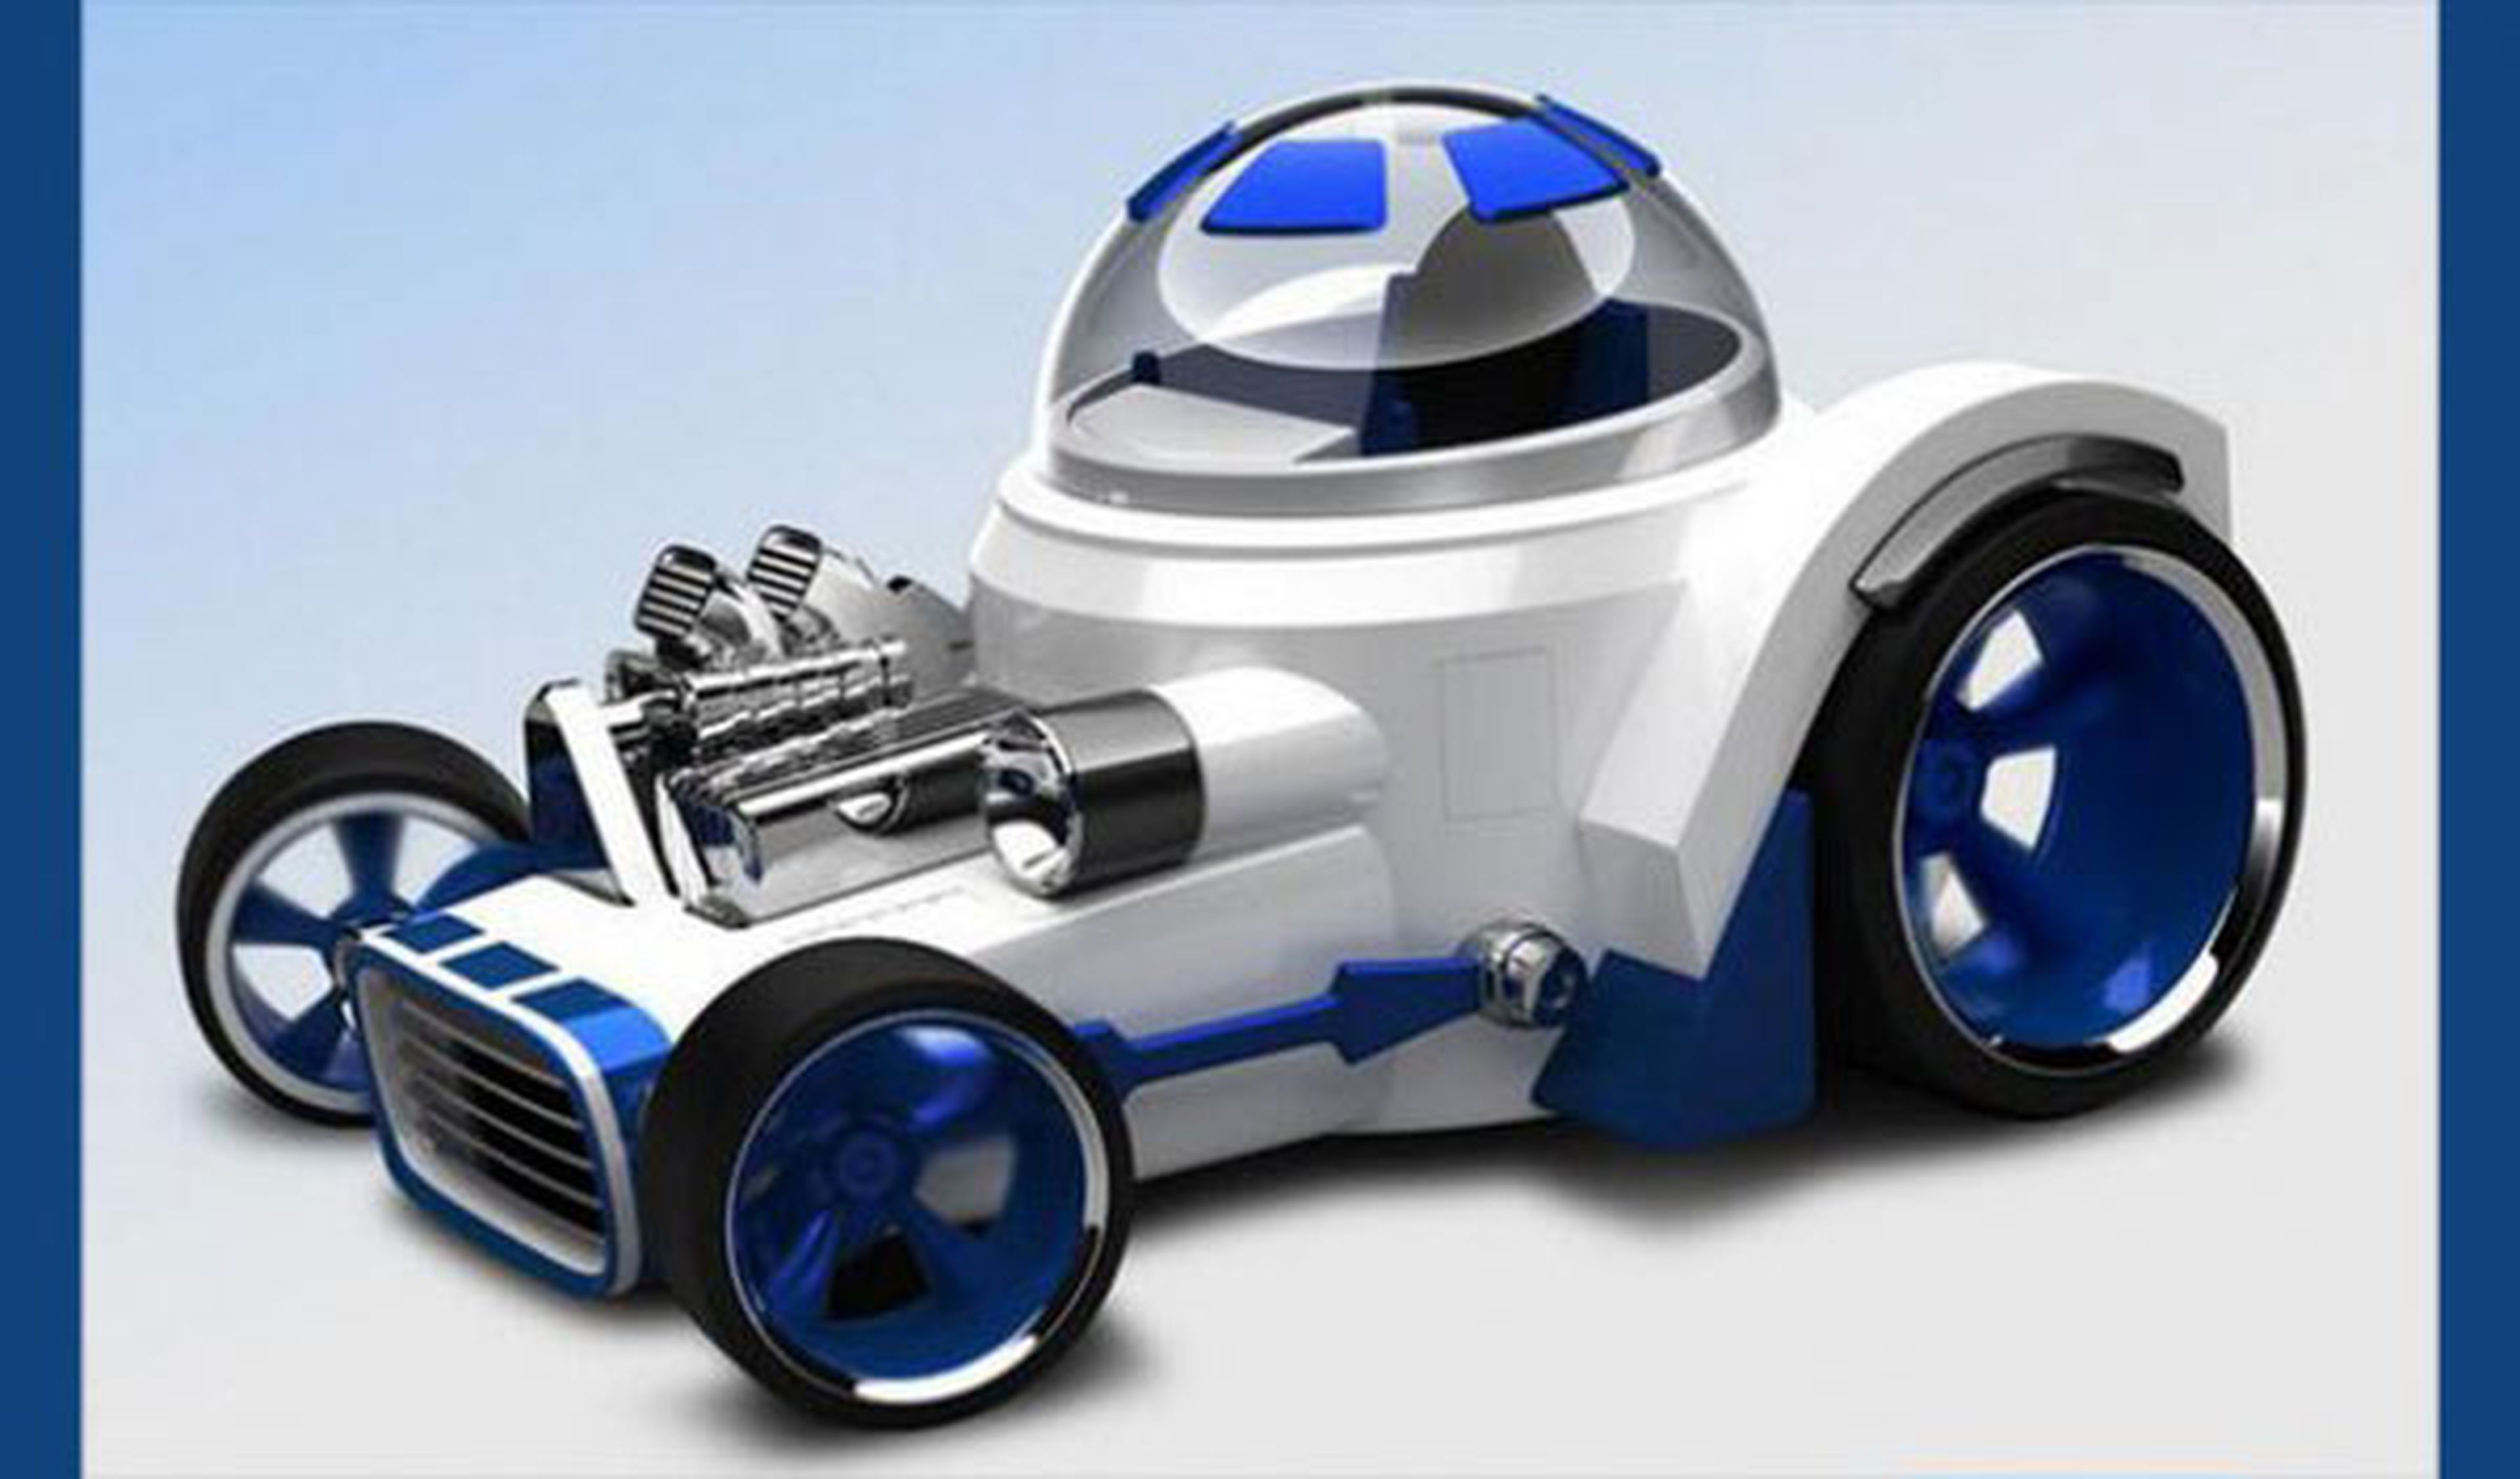 R2-D2 Hot Wheels